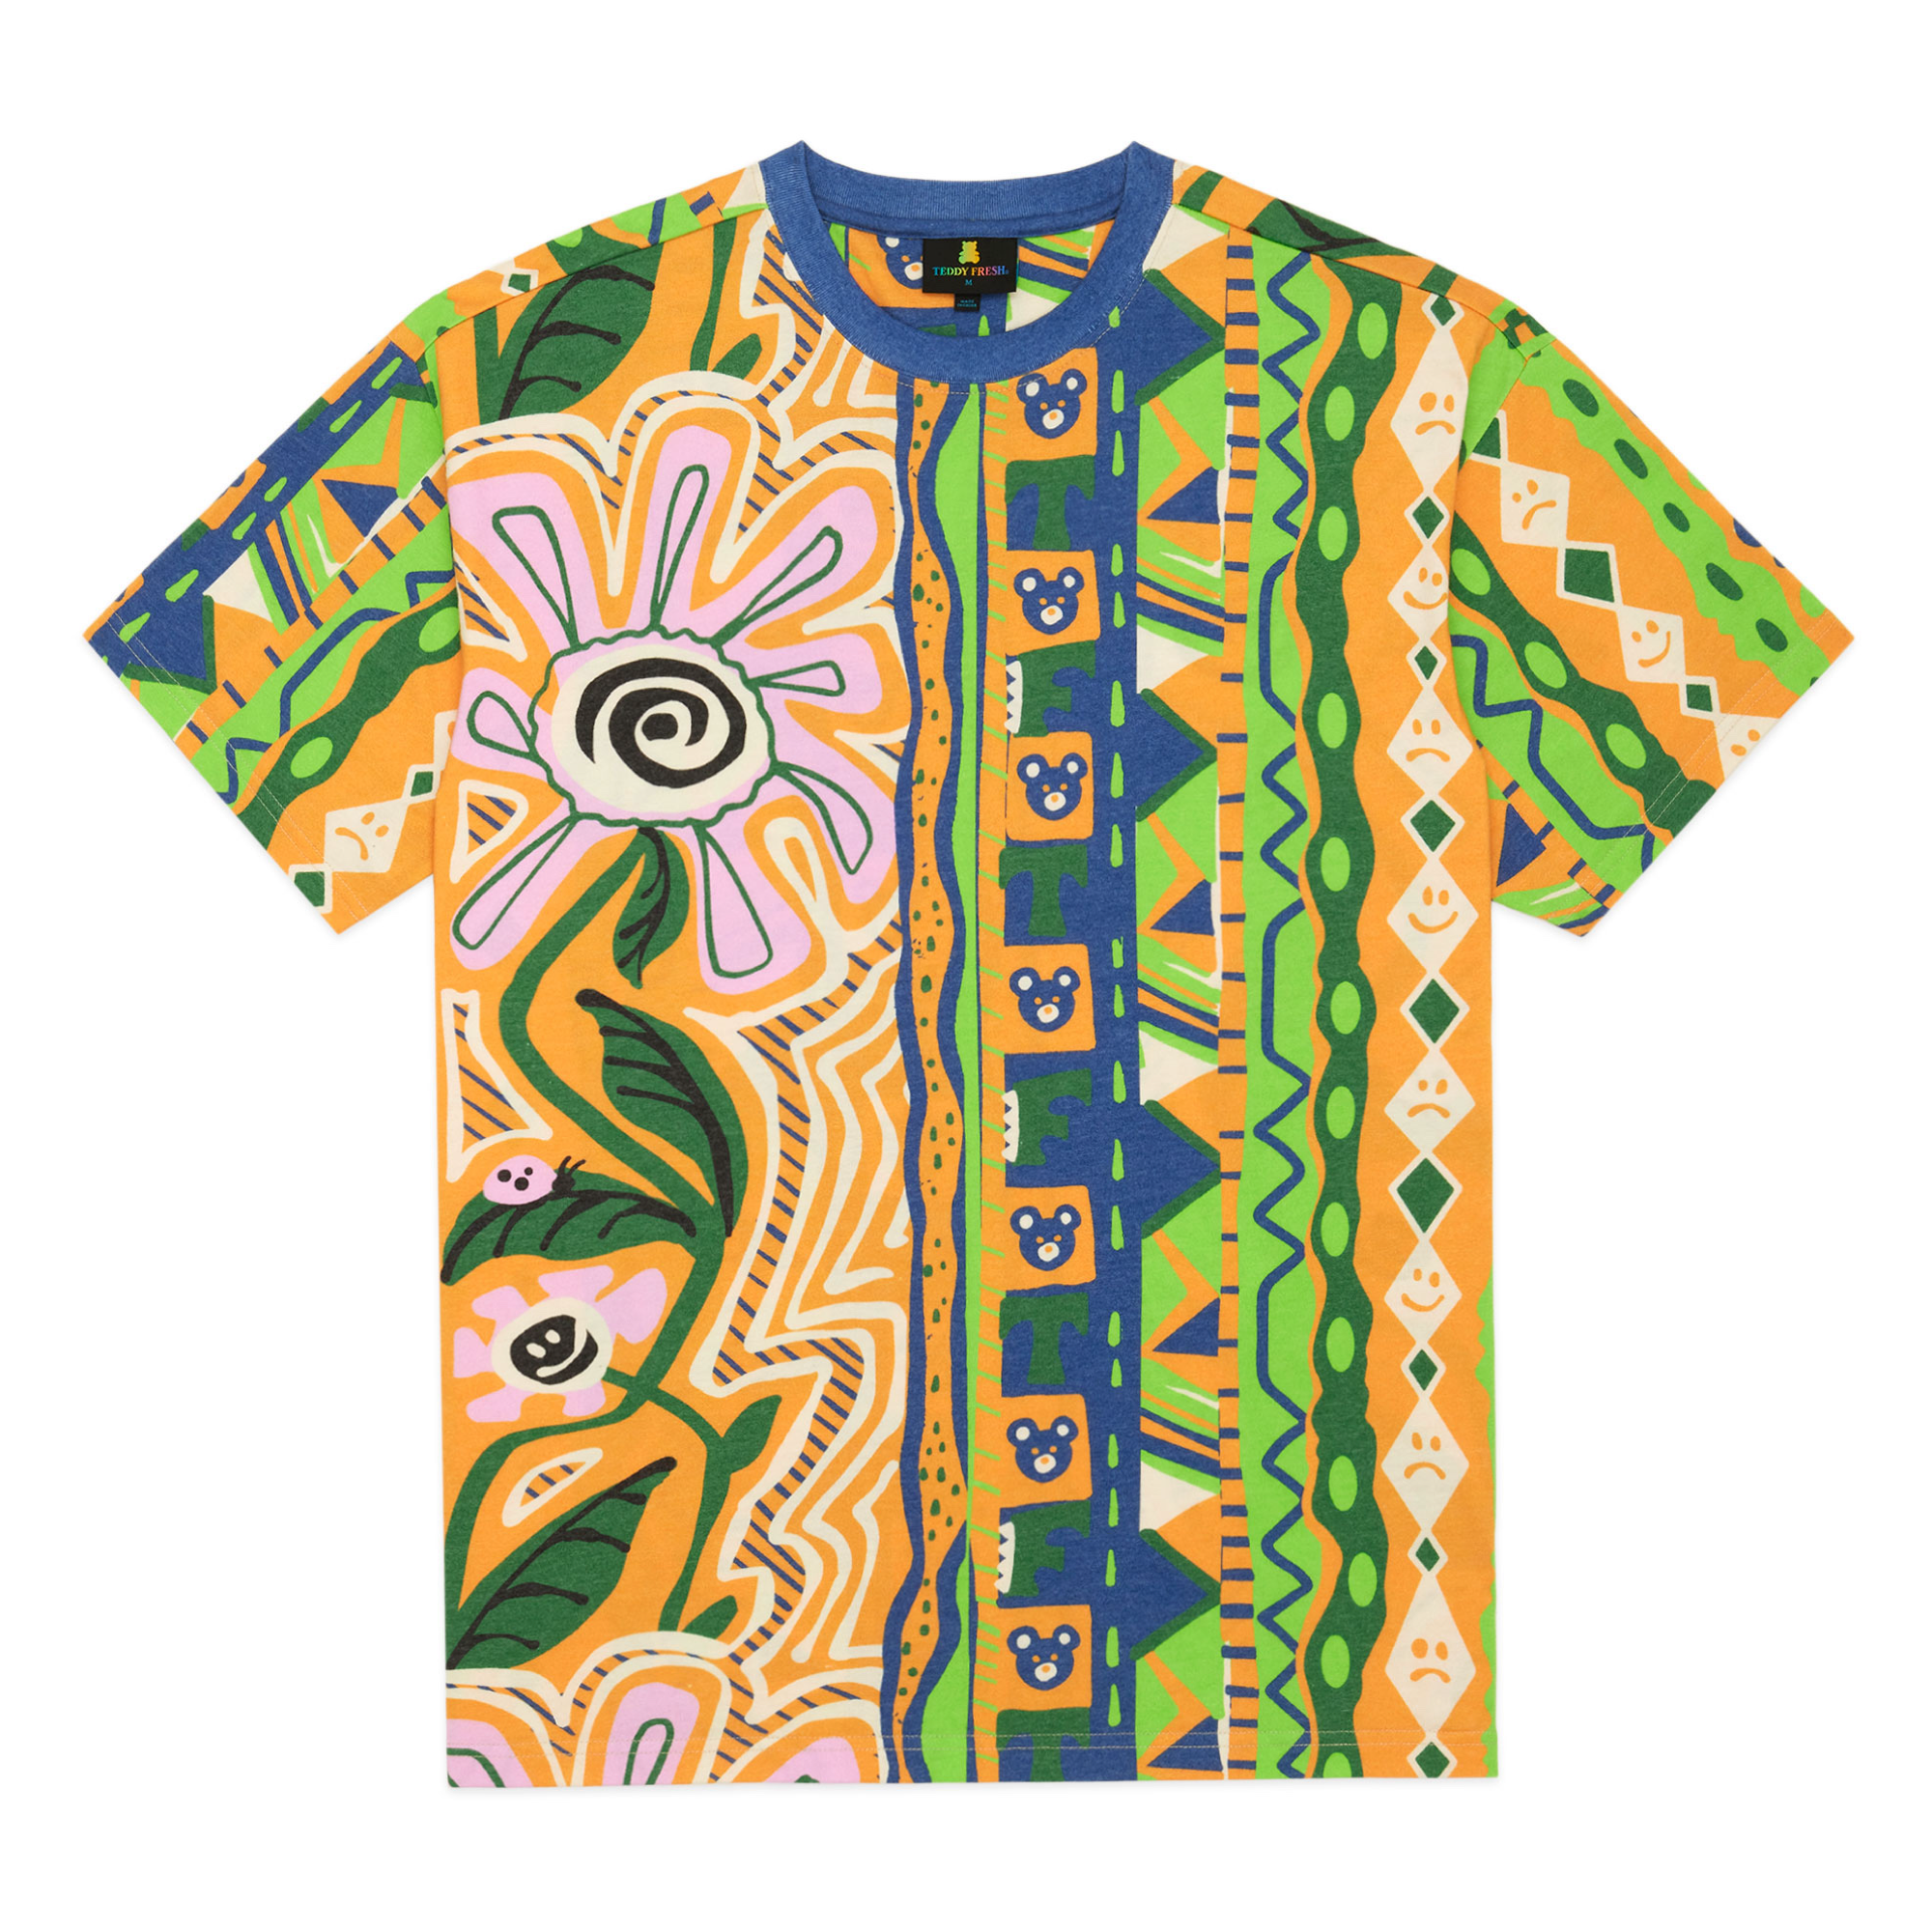 Teddy Fresh Unisex Adult's We're New Here Rainbow T-Shirt RP9 Yellow Medium  NWT